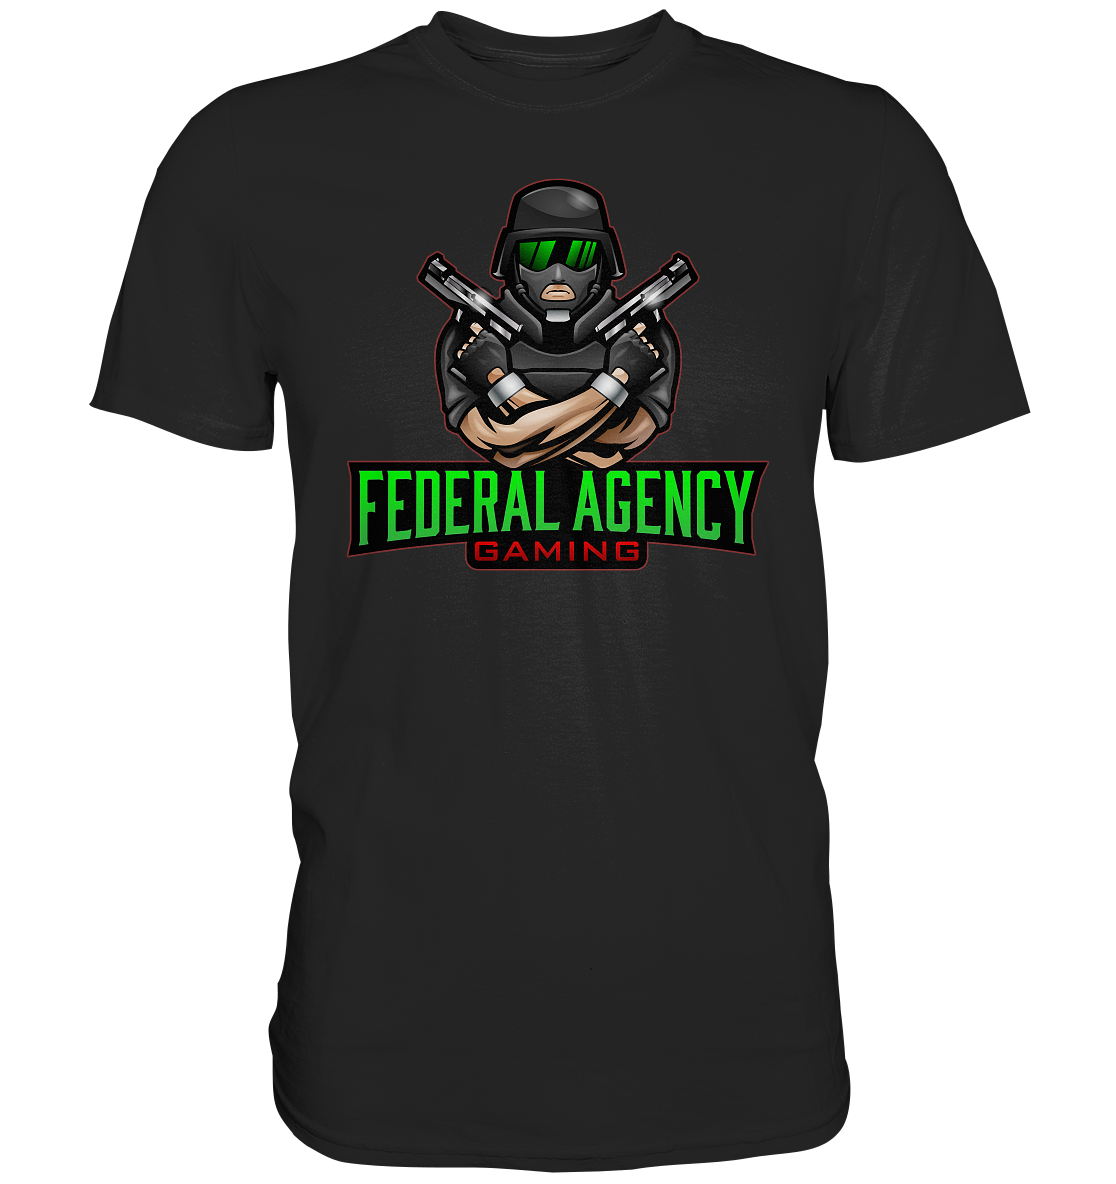 FEDERAL AGENCY GAMING - Basic Shirt